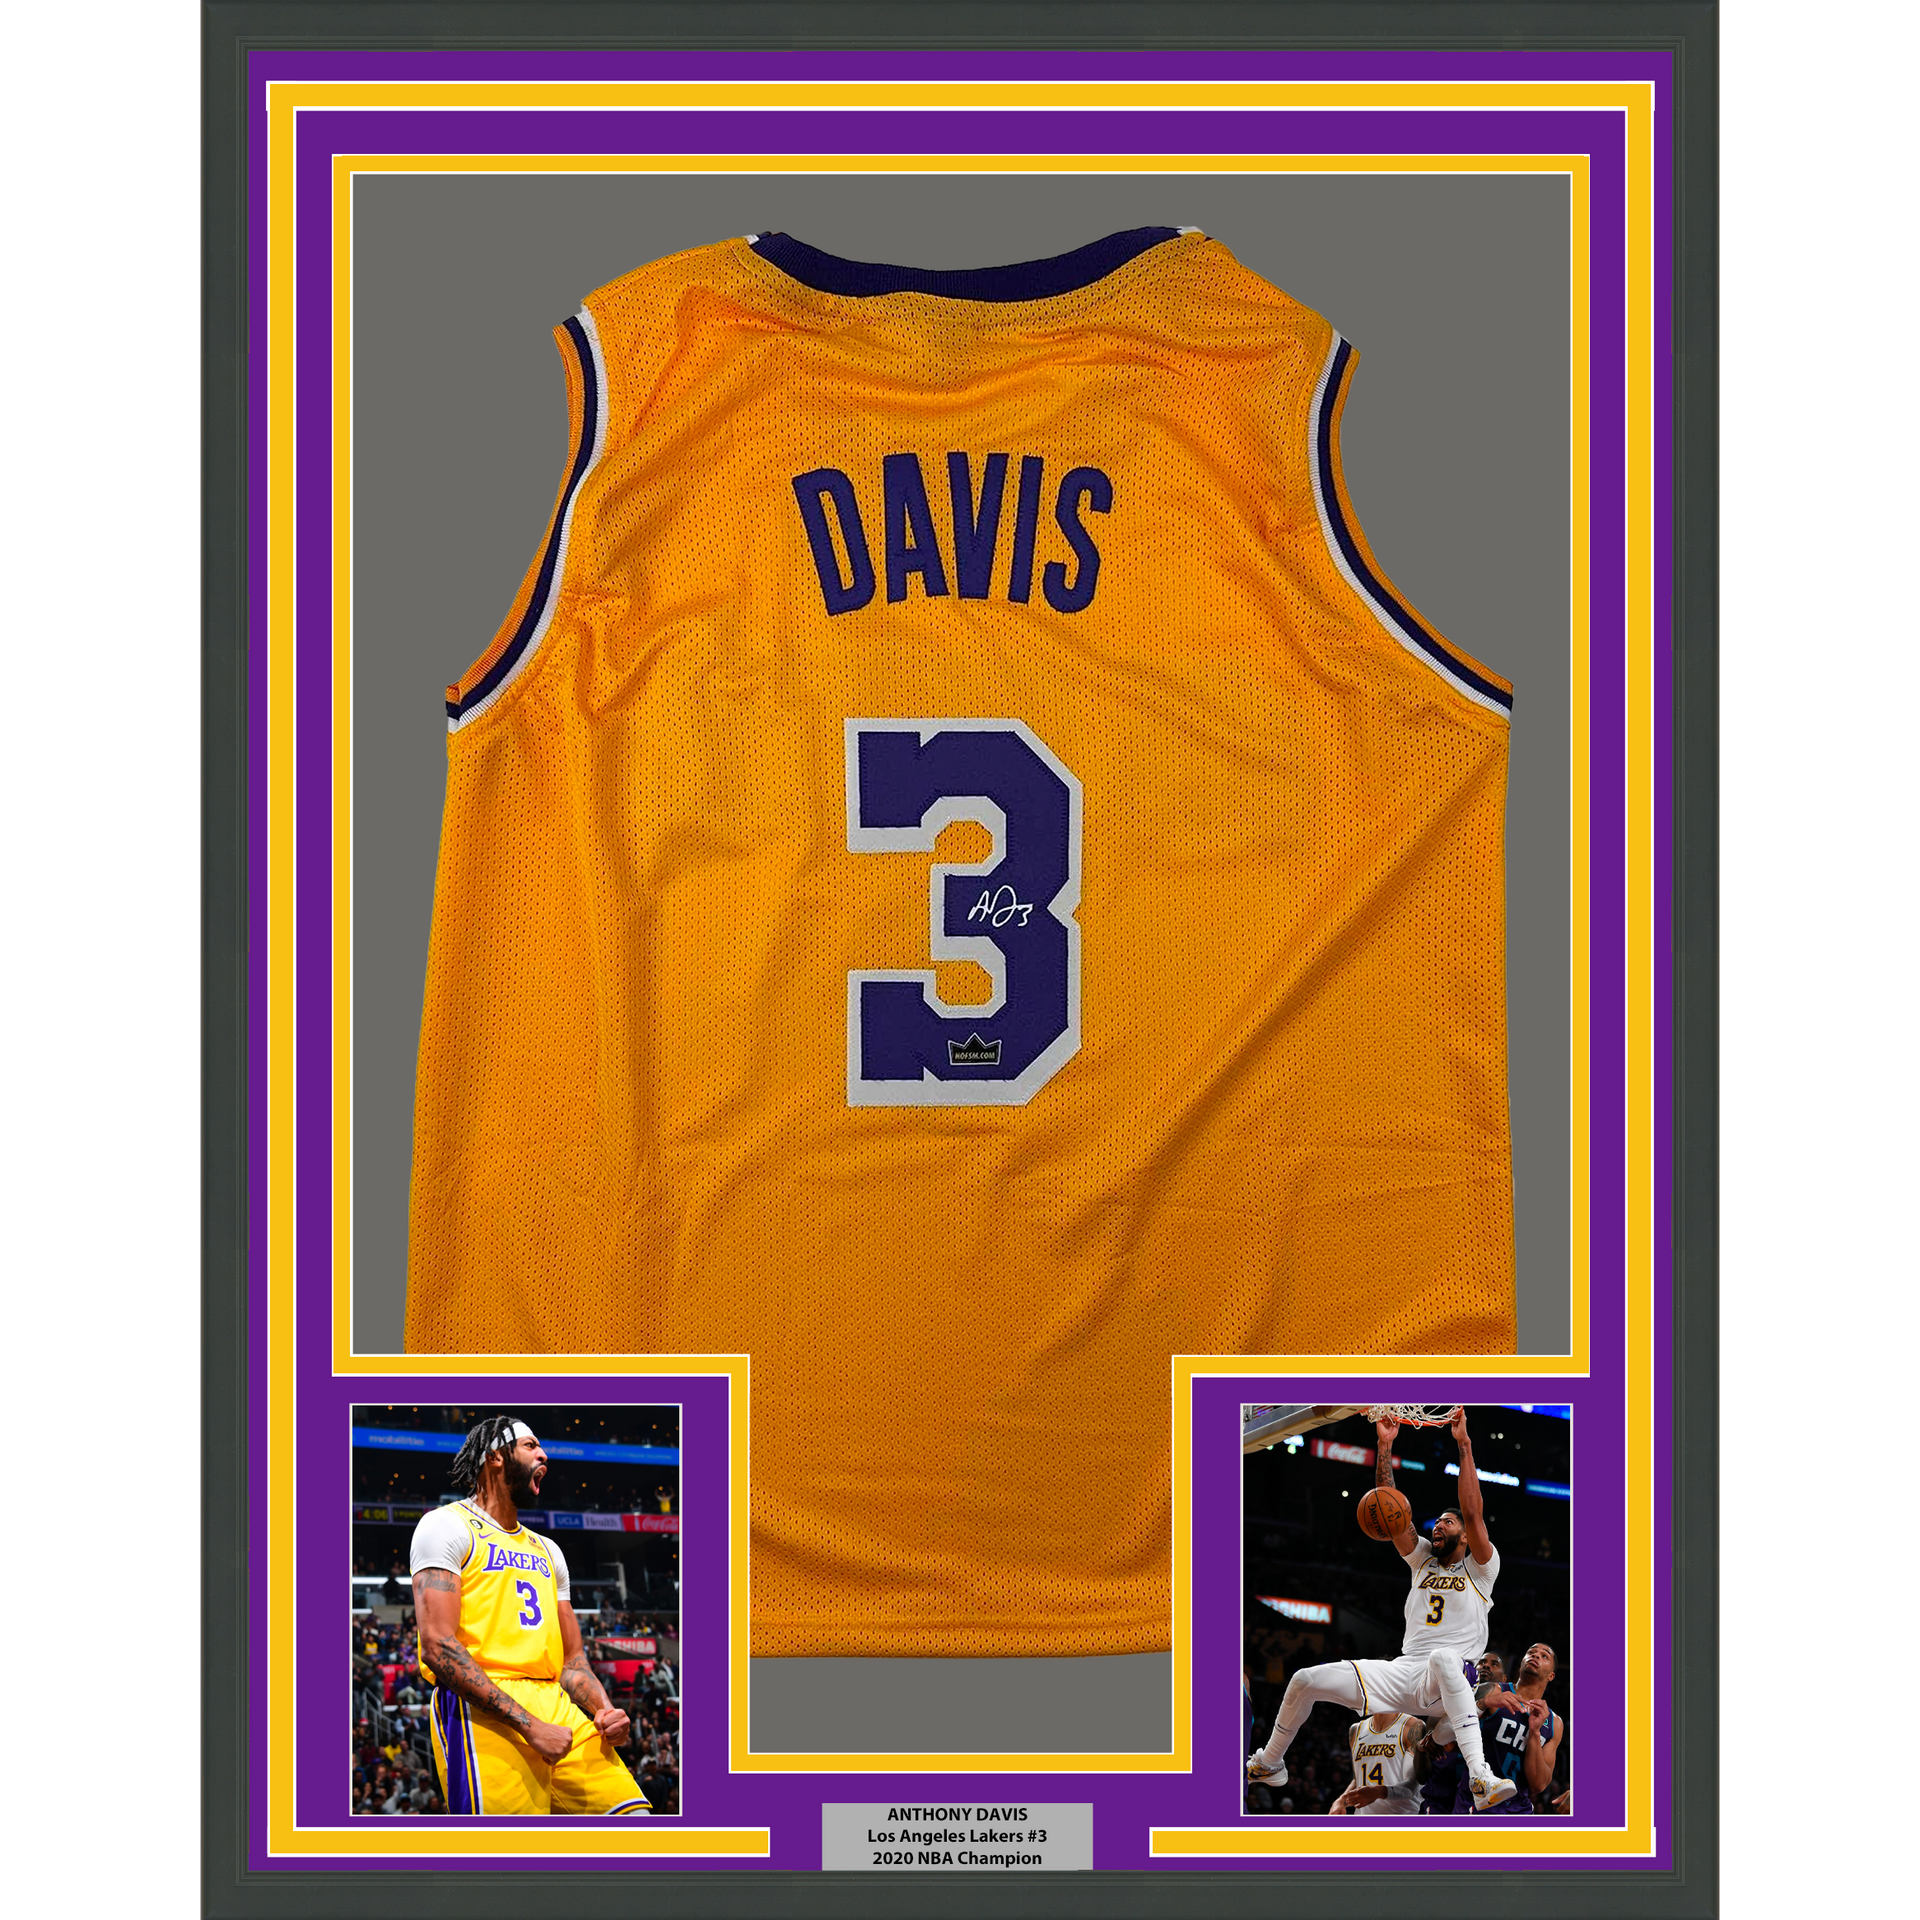 NBA Framed Jerseys, Hall of Fame Sports Memorabilia